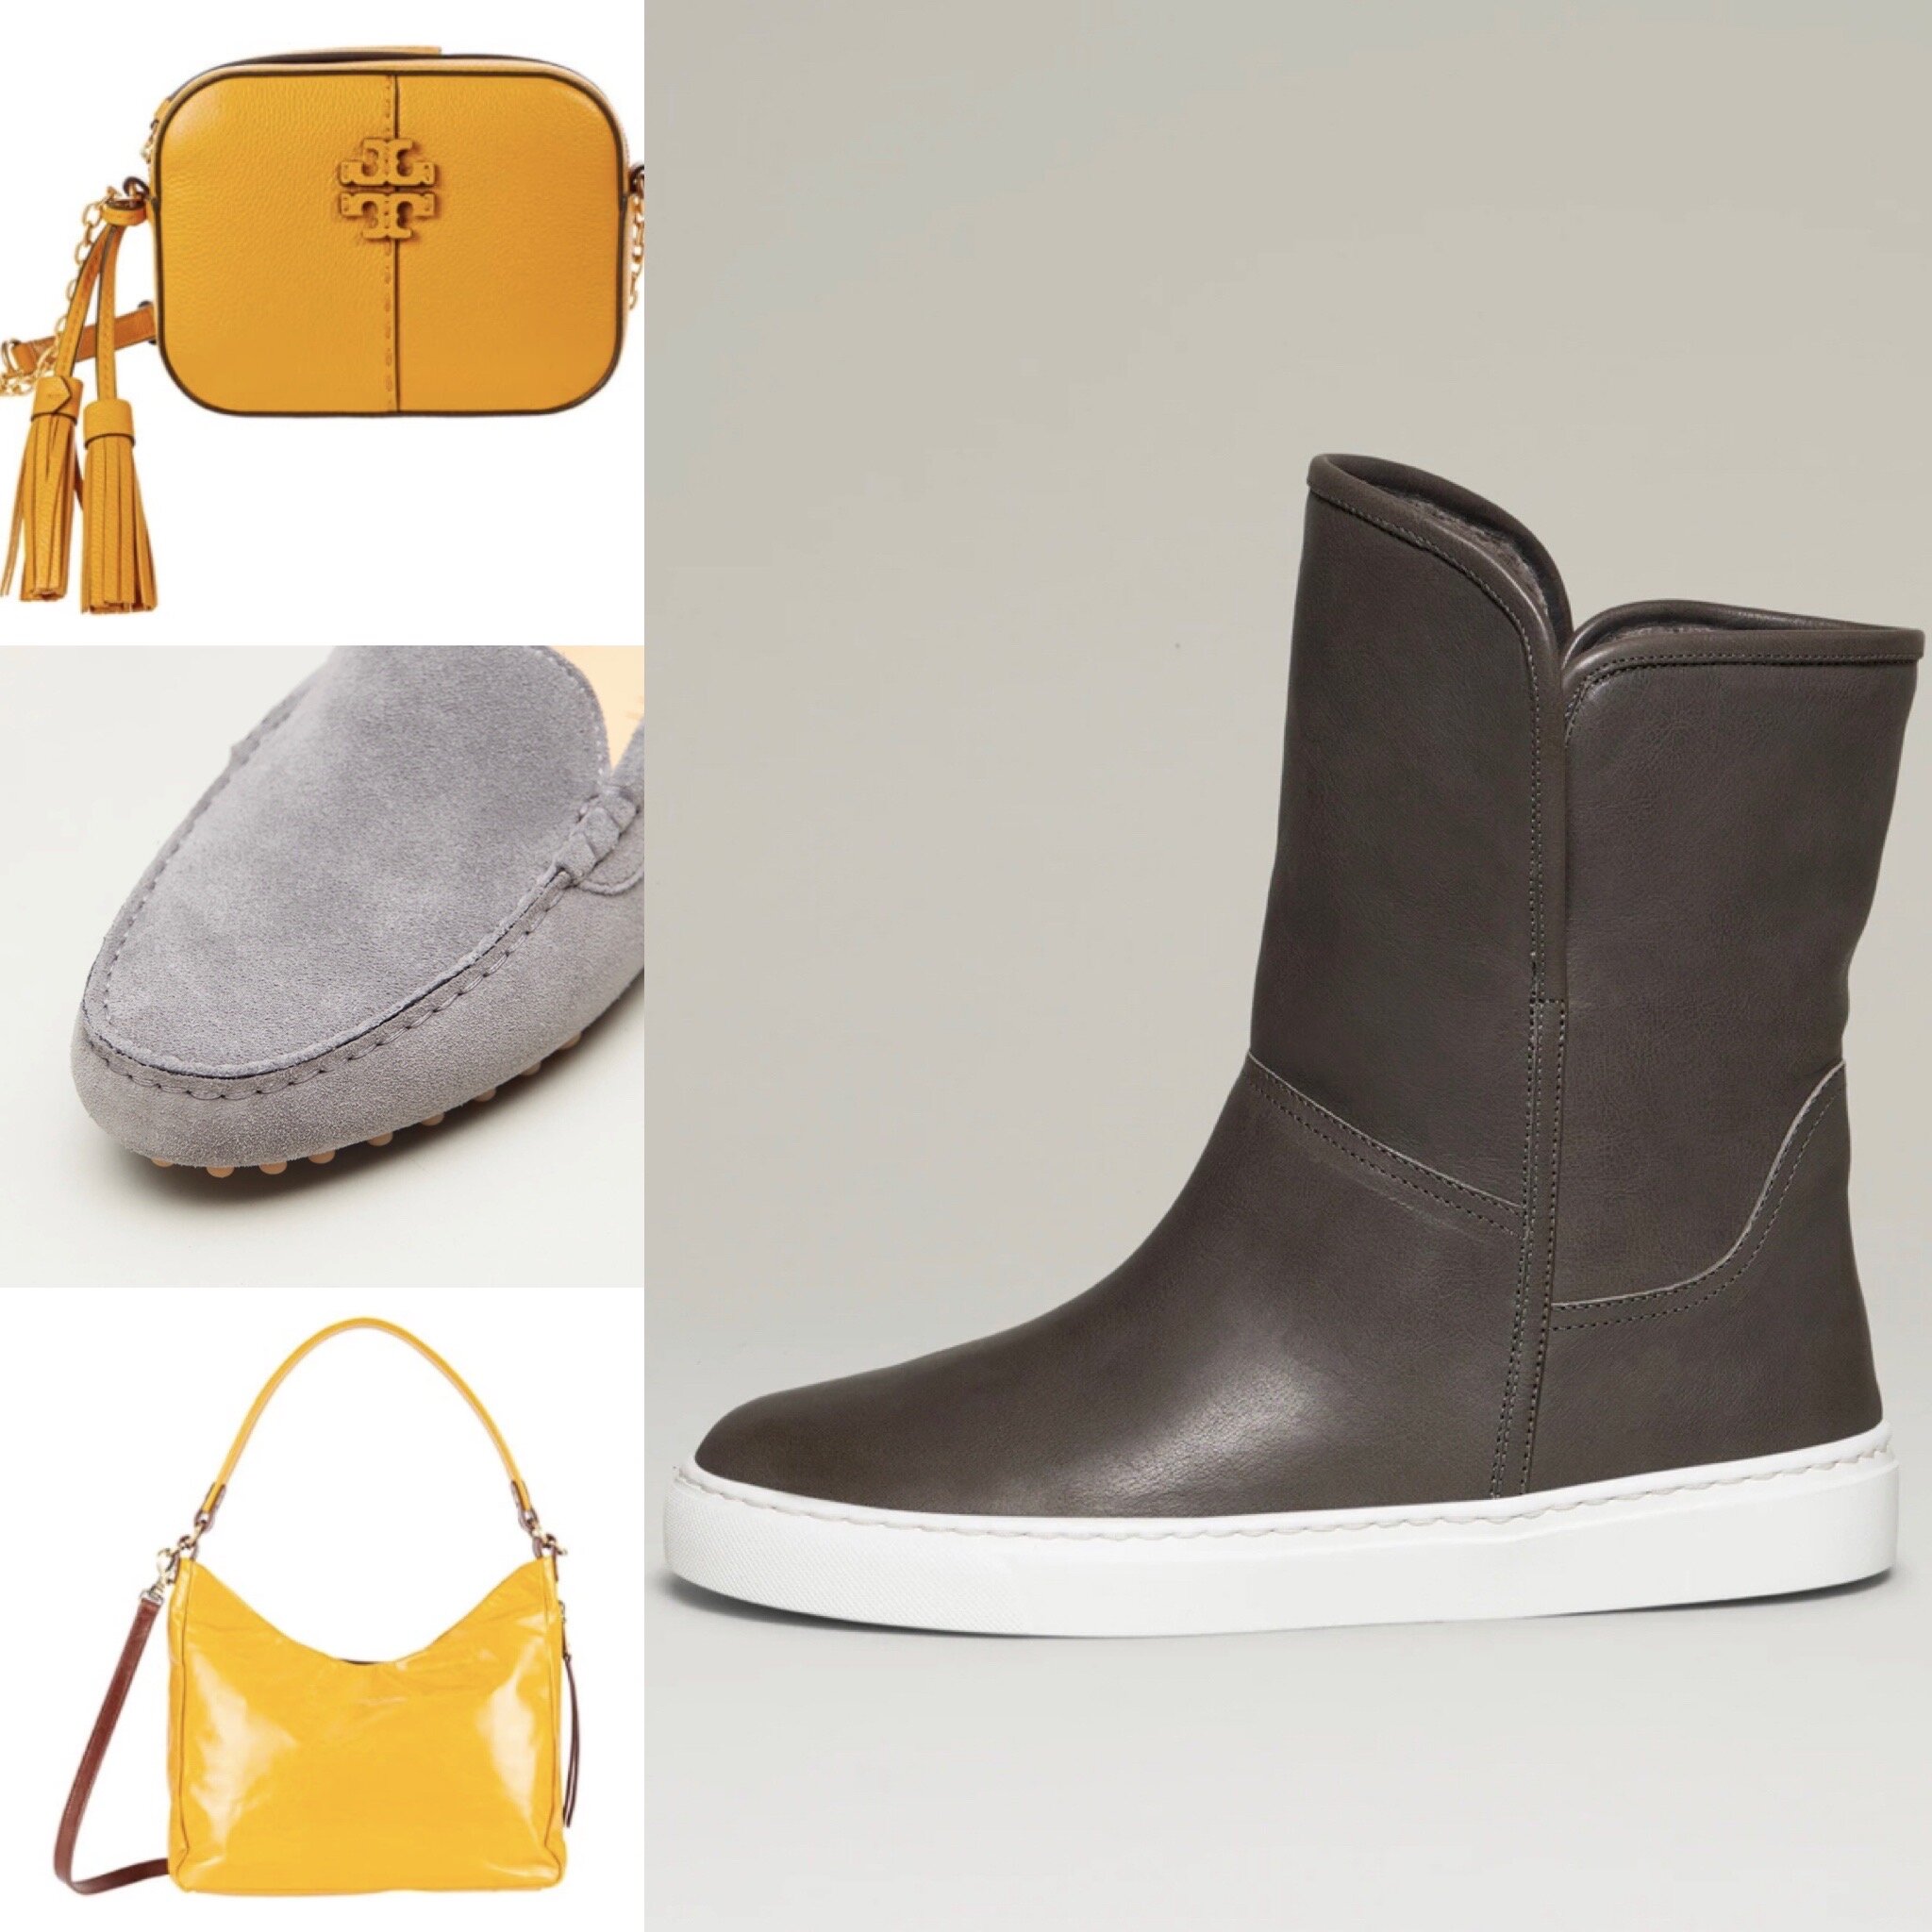 yellow and grey shoes and handbags.jpeg